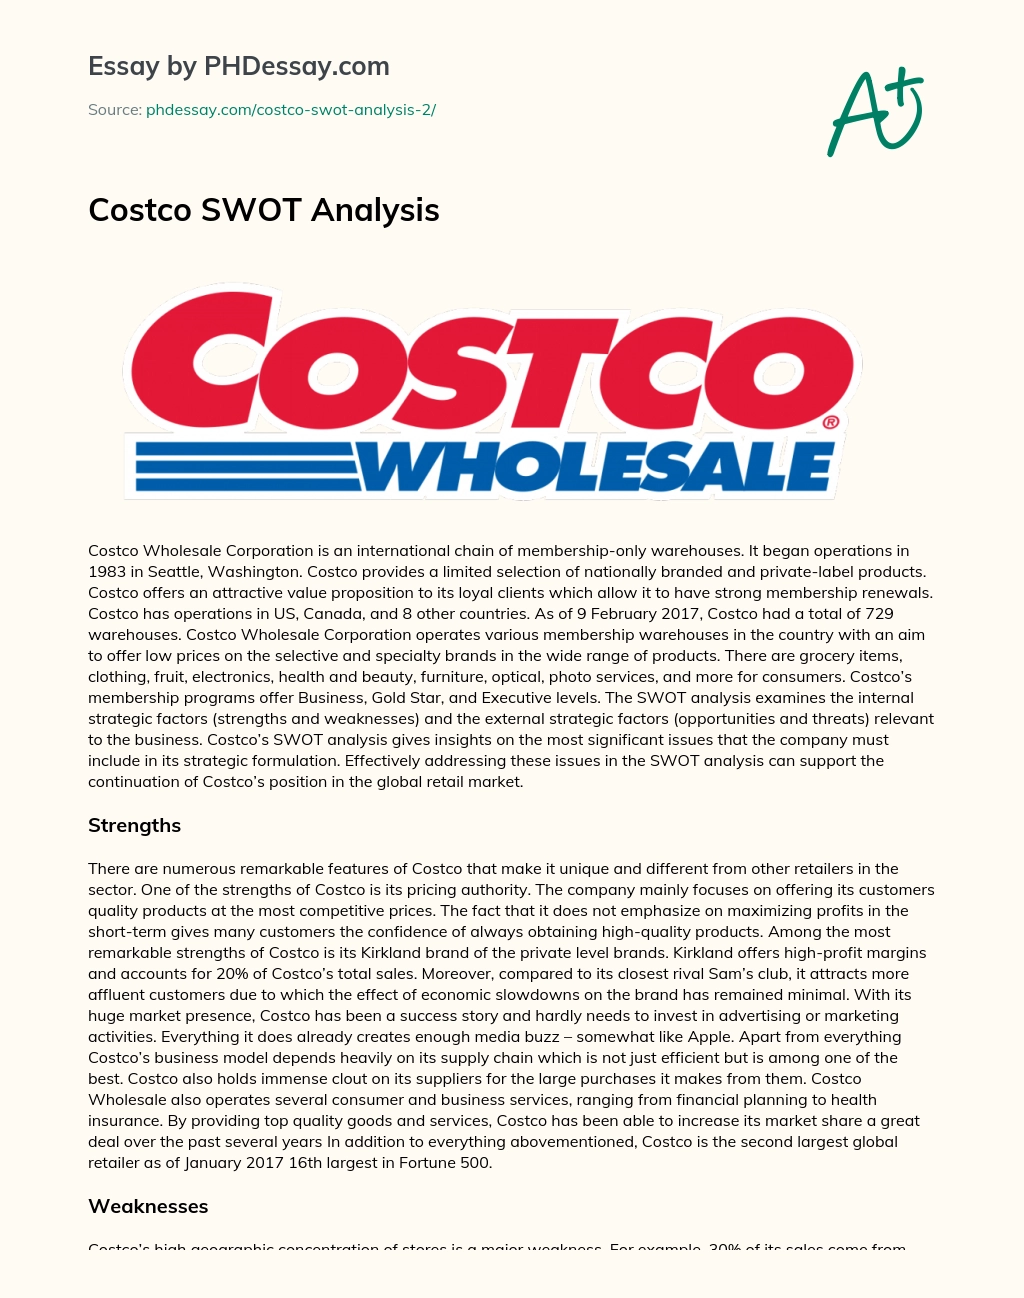 Costco SWOT Analysis essay